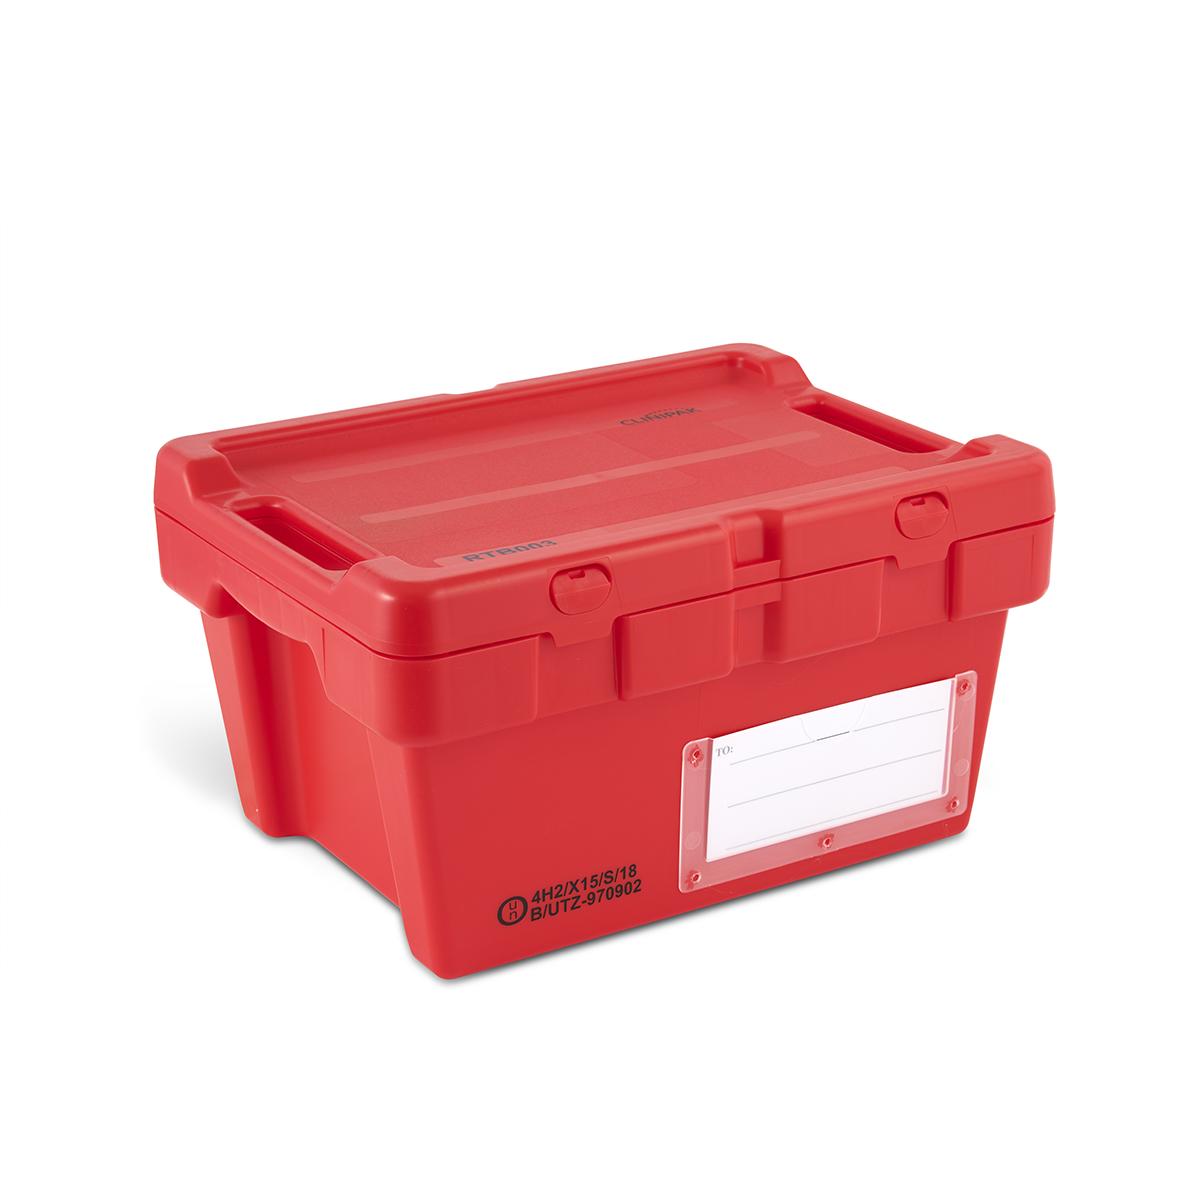 Red Transport Box Image